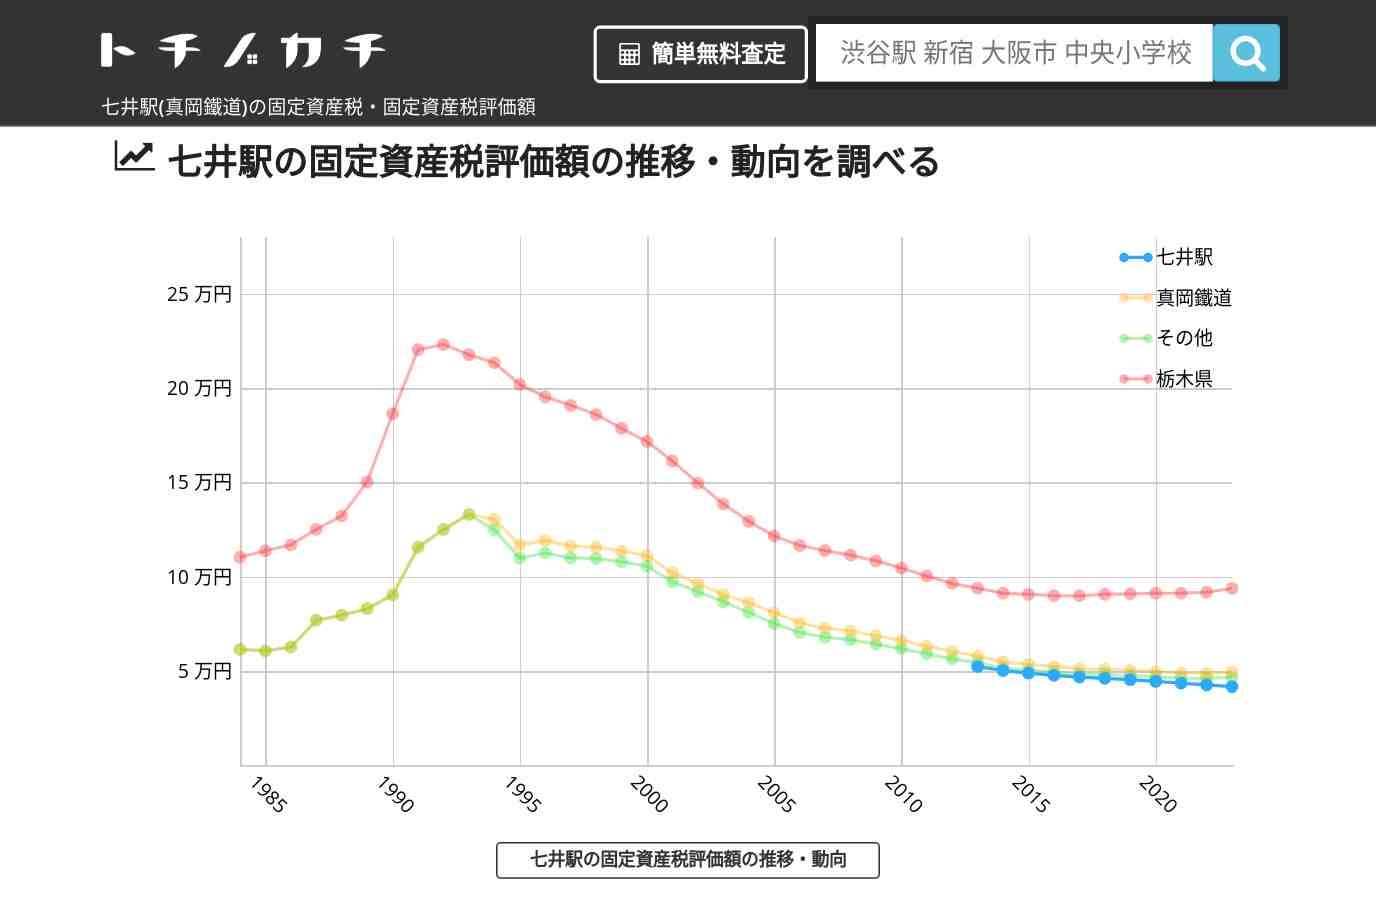 七井駅(真岡鐵道)の固定資産税・固定資産税評価額 | トチノカチ